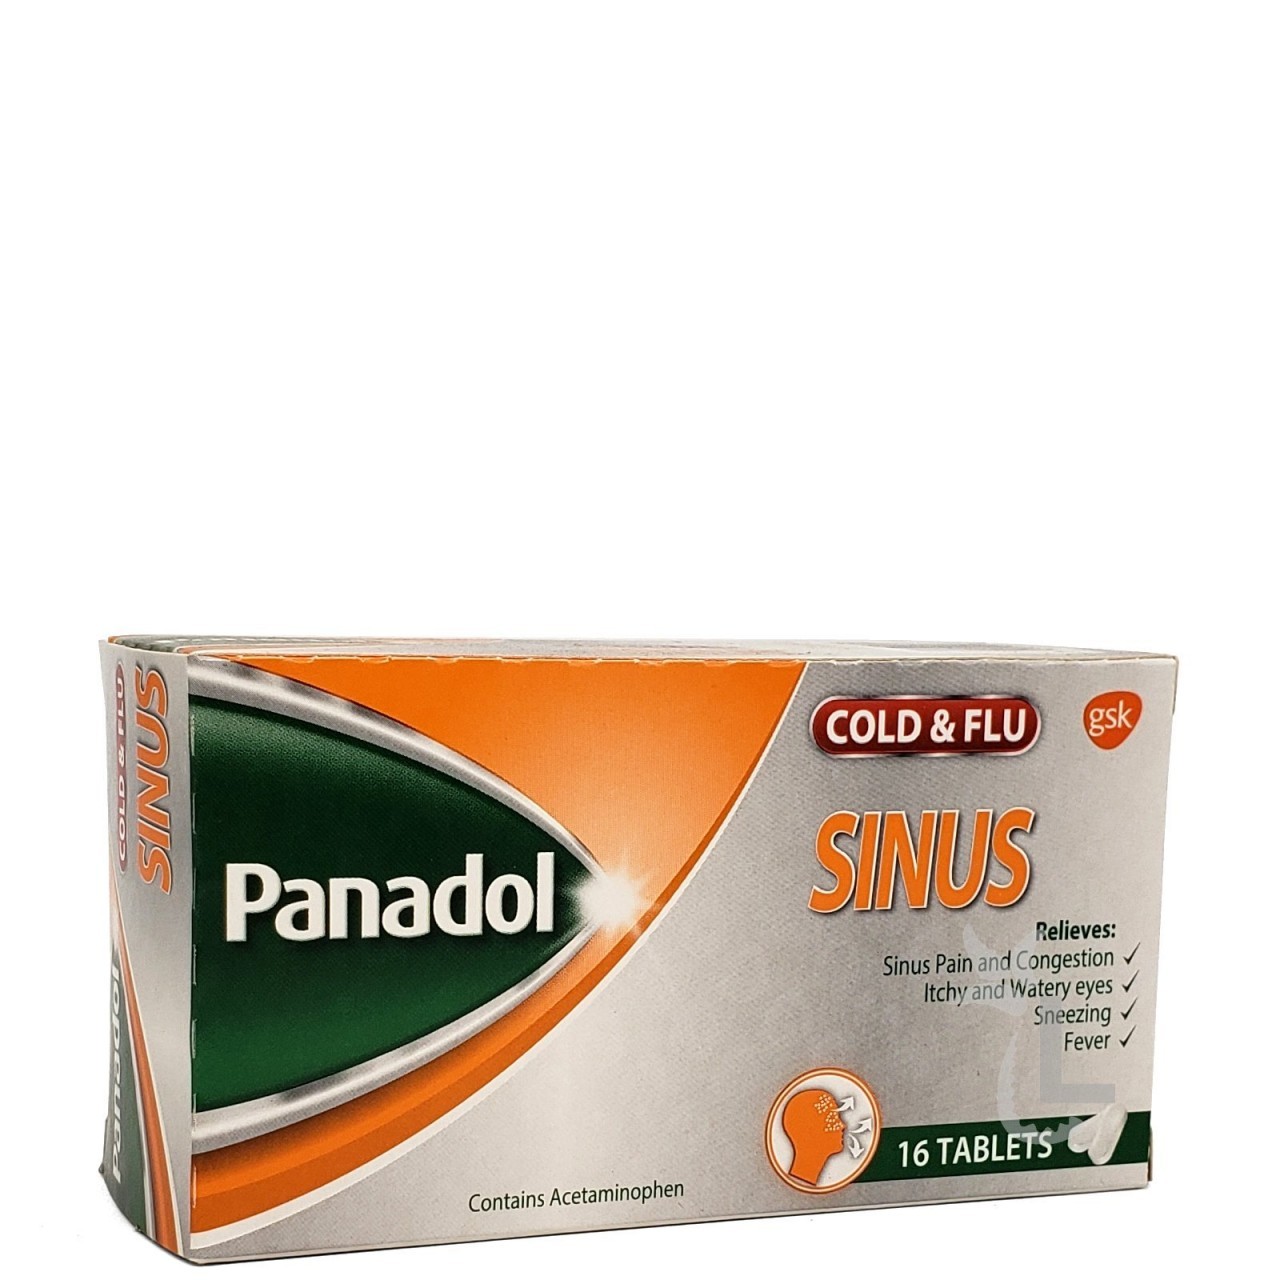 PANADOL COLD & FLU SINUS 16s